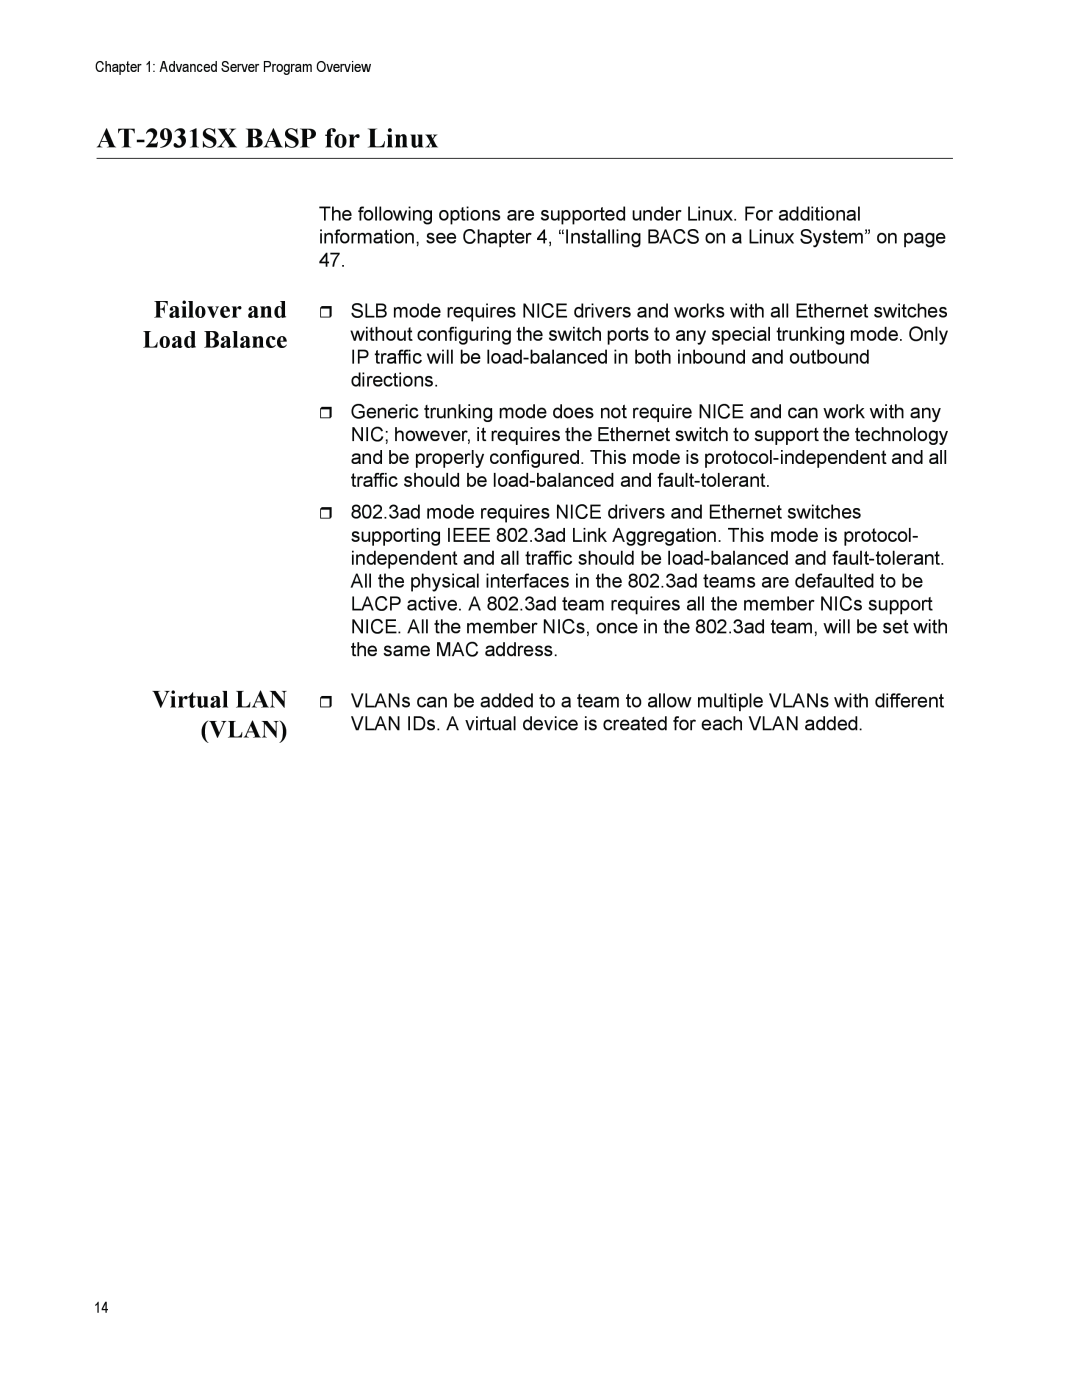 Allied Telesis manual AT-2931SX BASP for Linux, Virtual LAN VLAN, Failover and Load Balance 